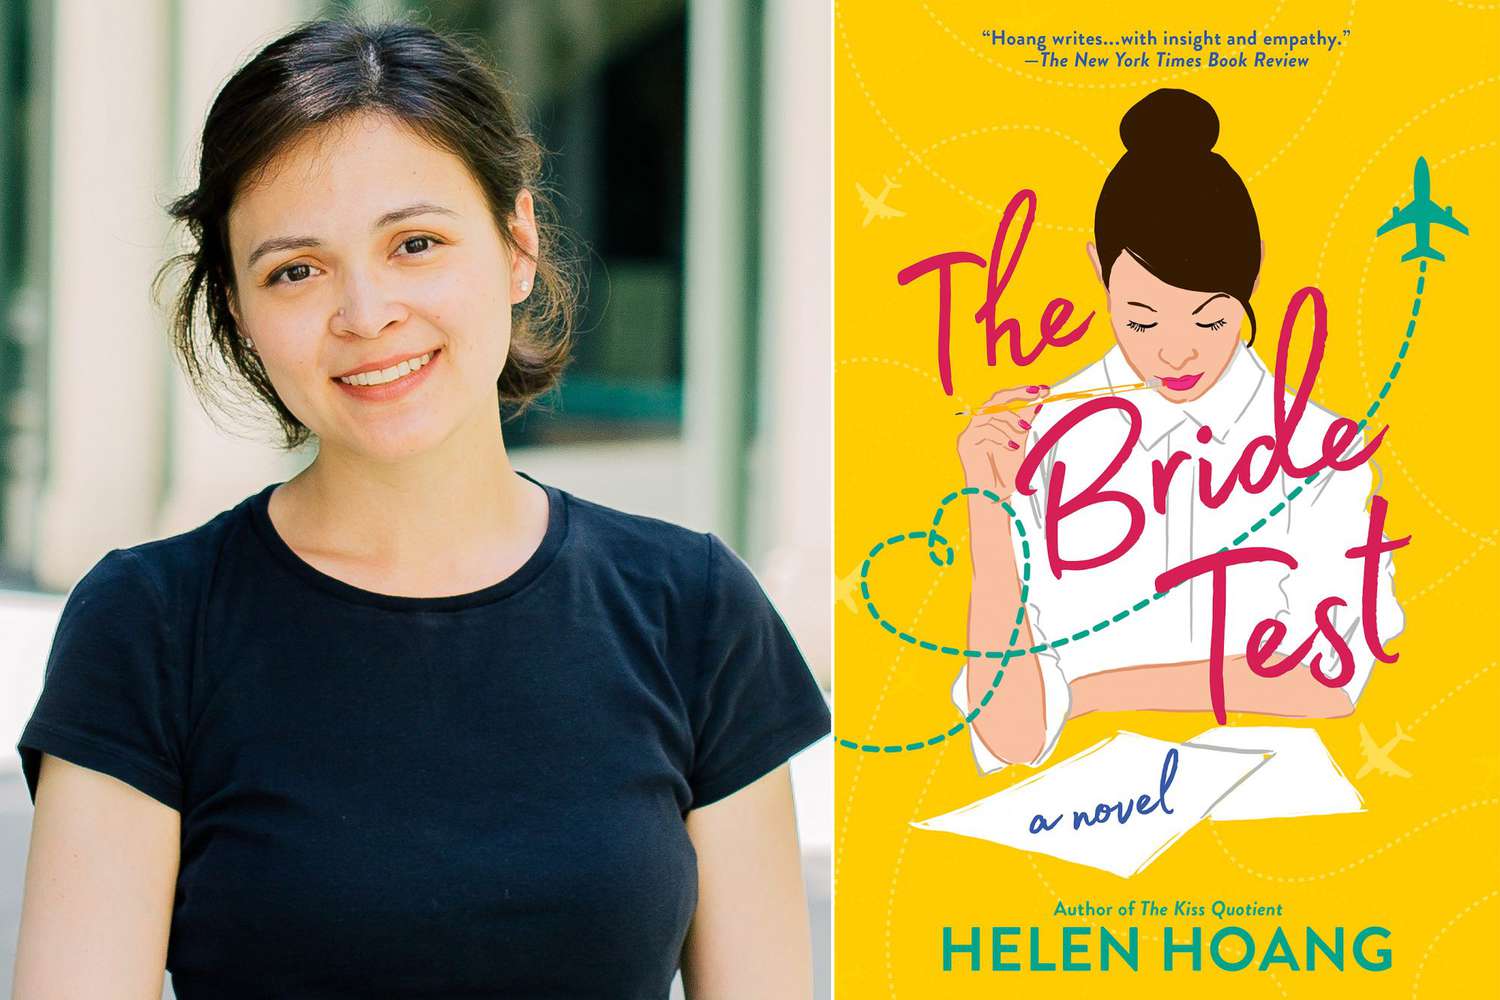 The Bride Test Helen Hoang